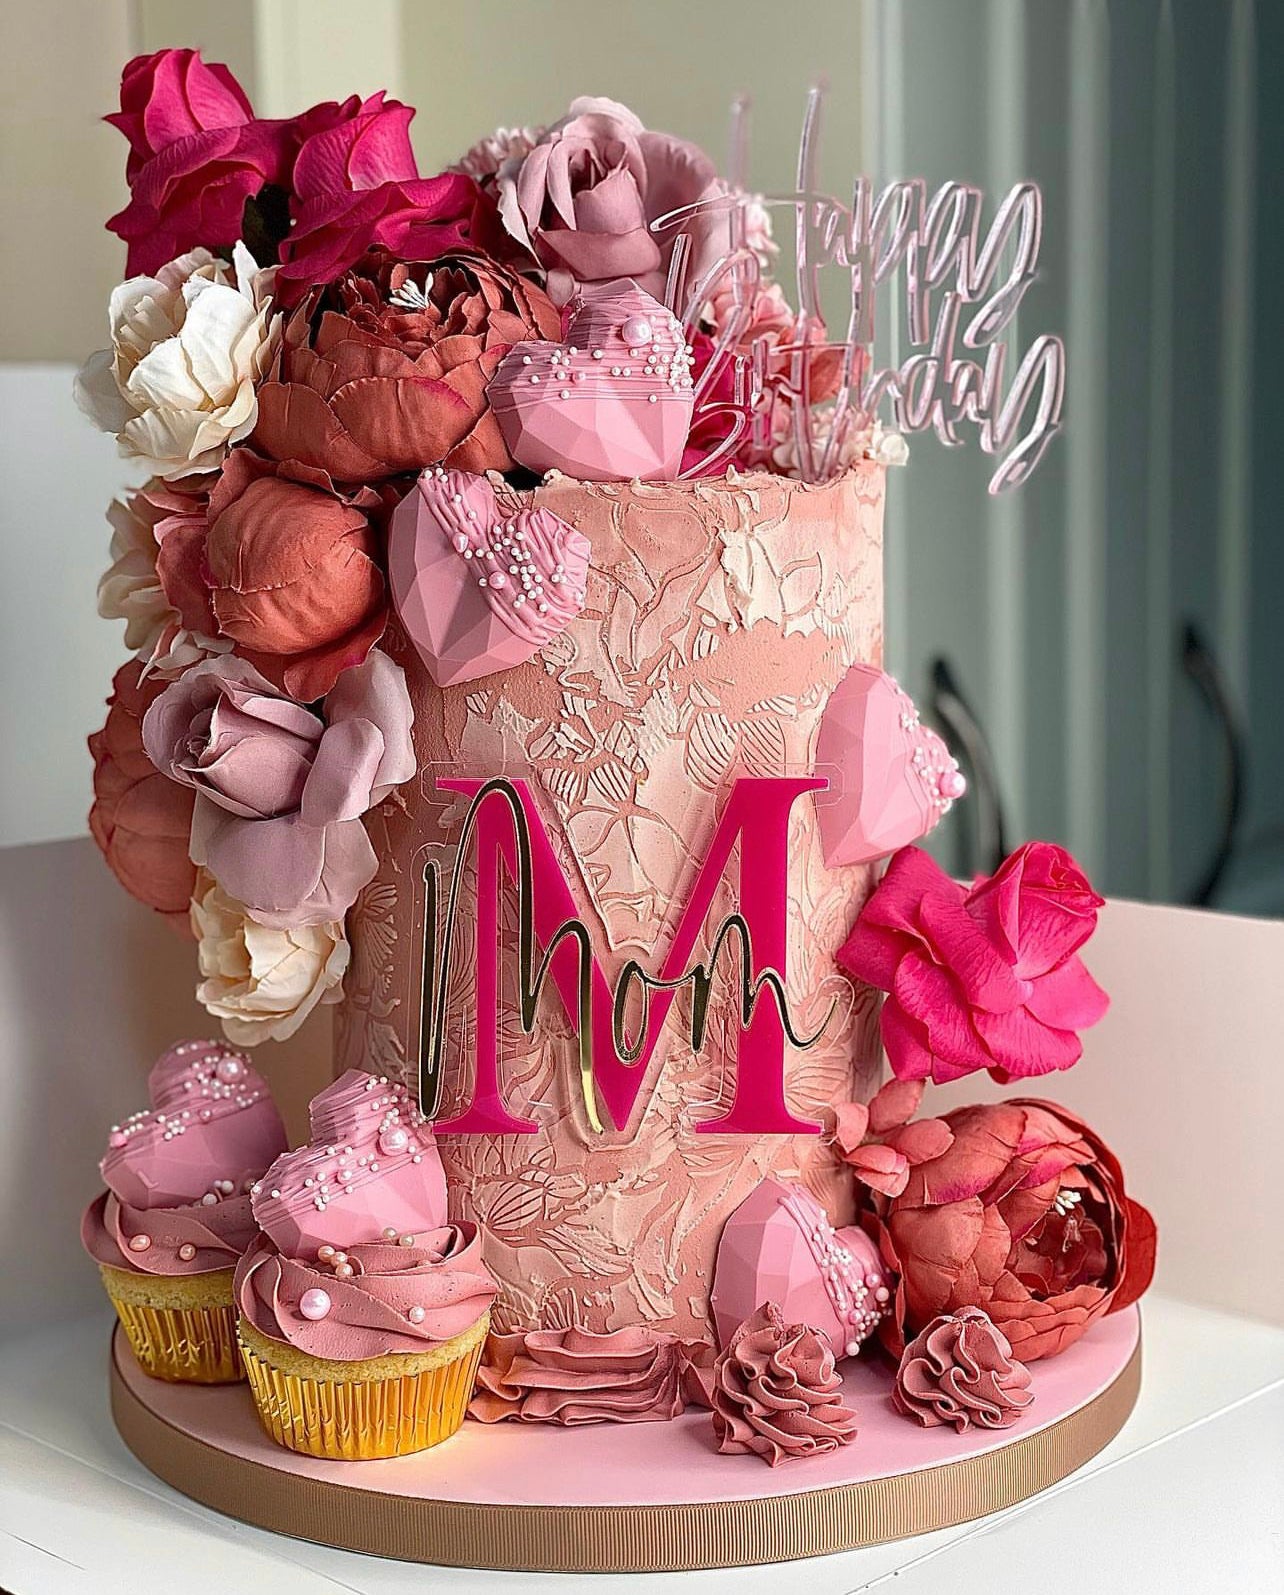 Coloured translucent 'Happy Birthday' Cake topper